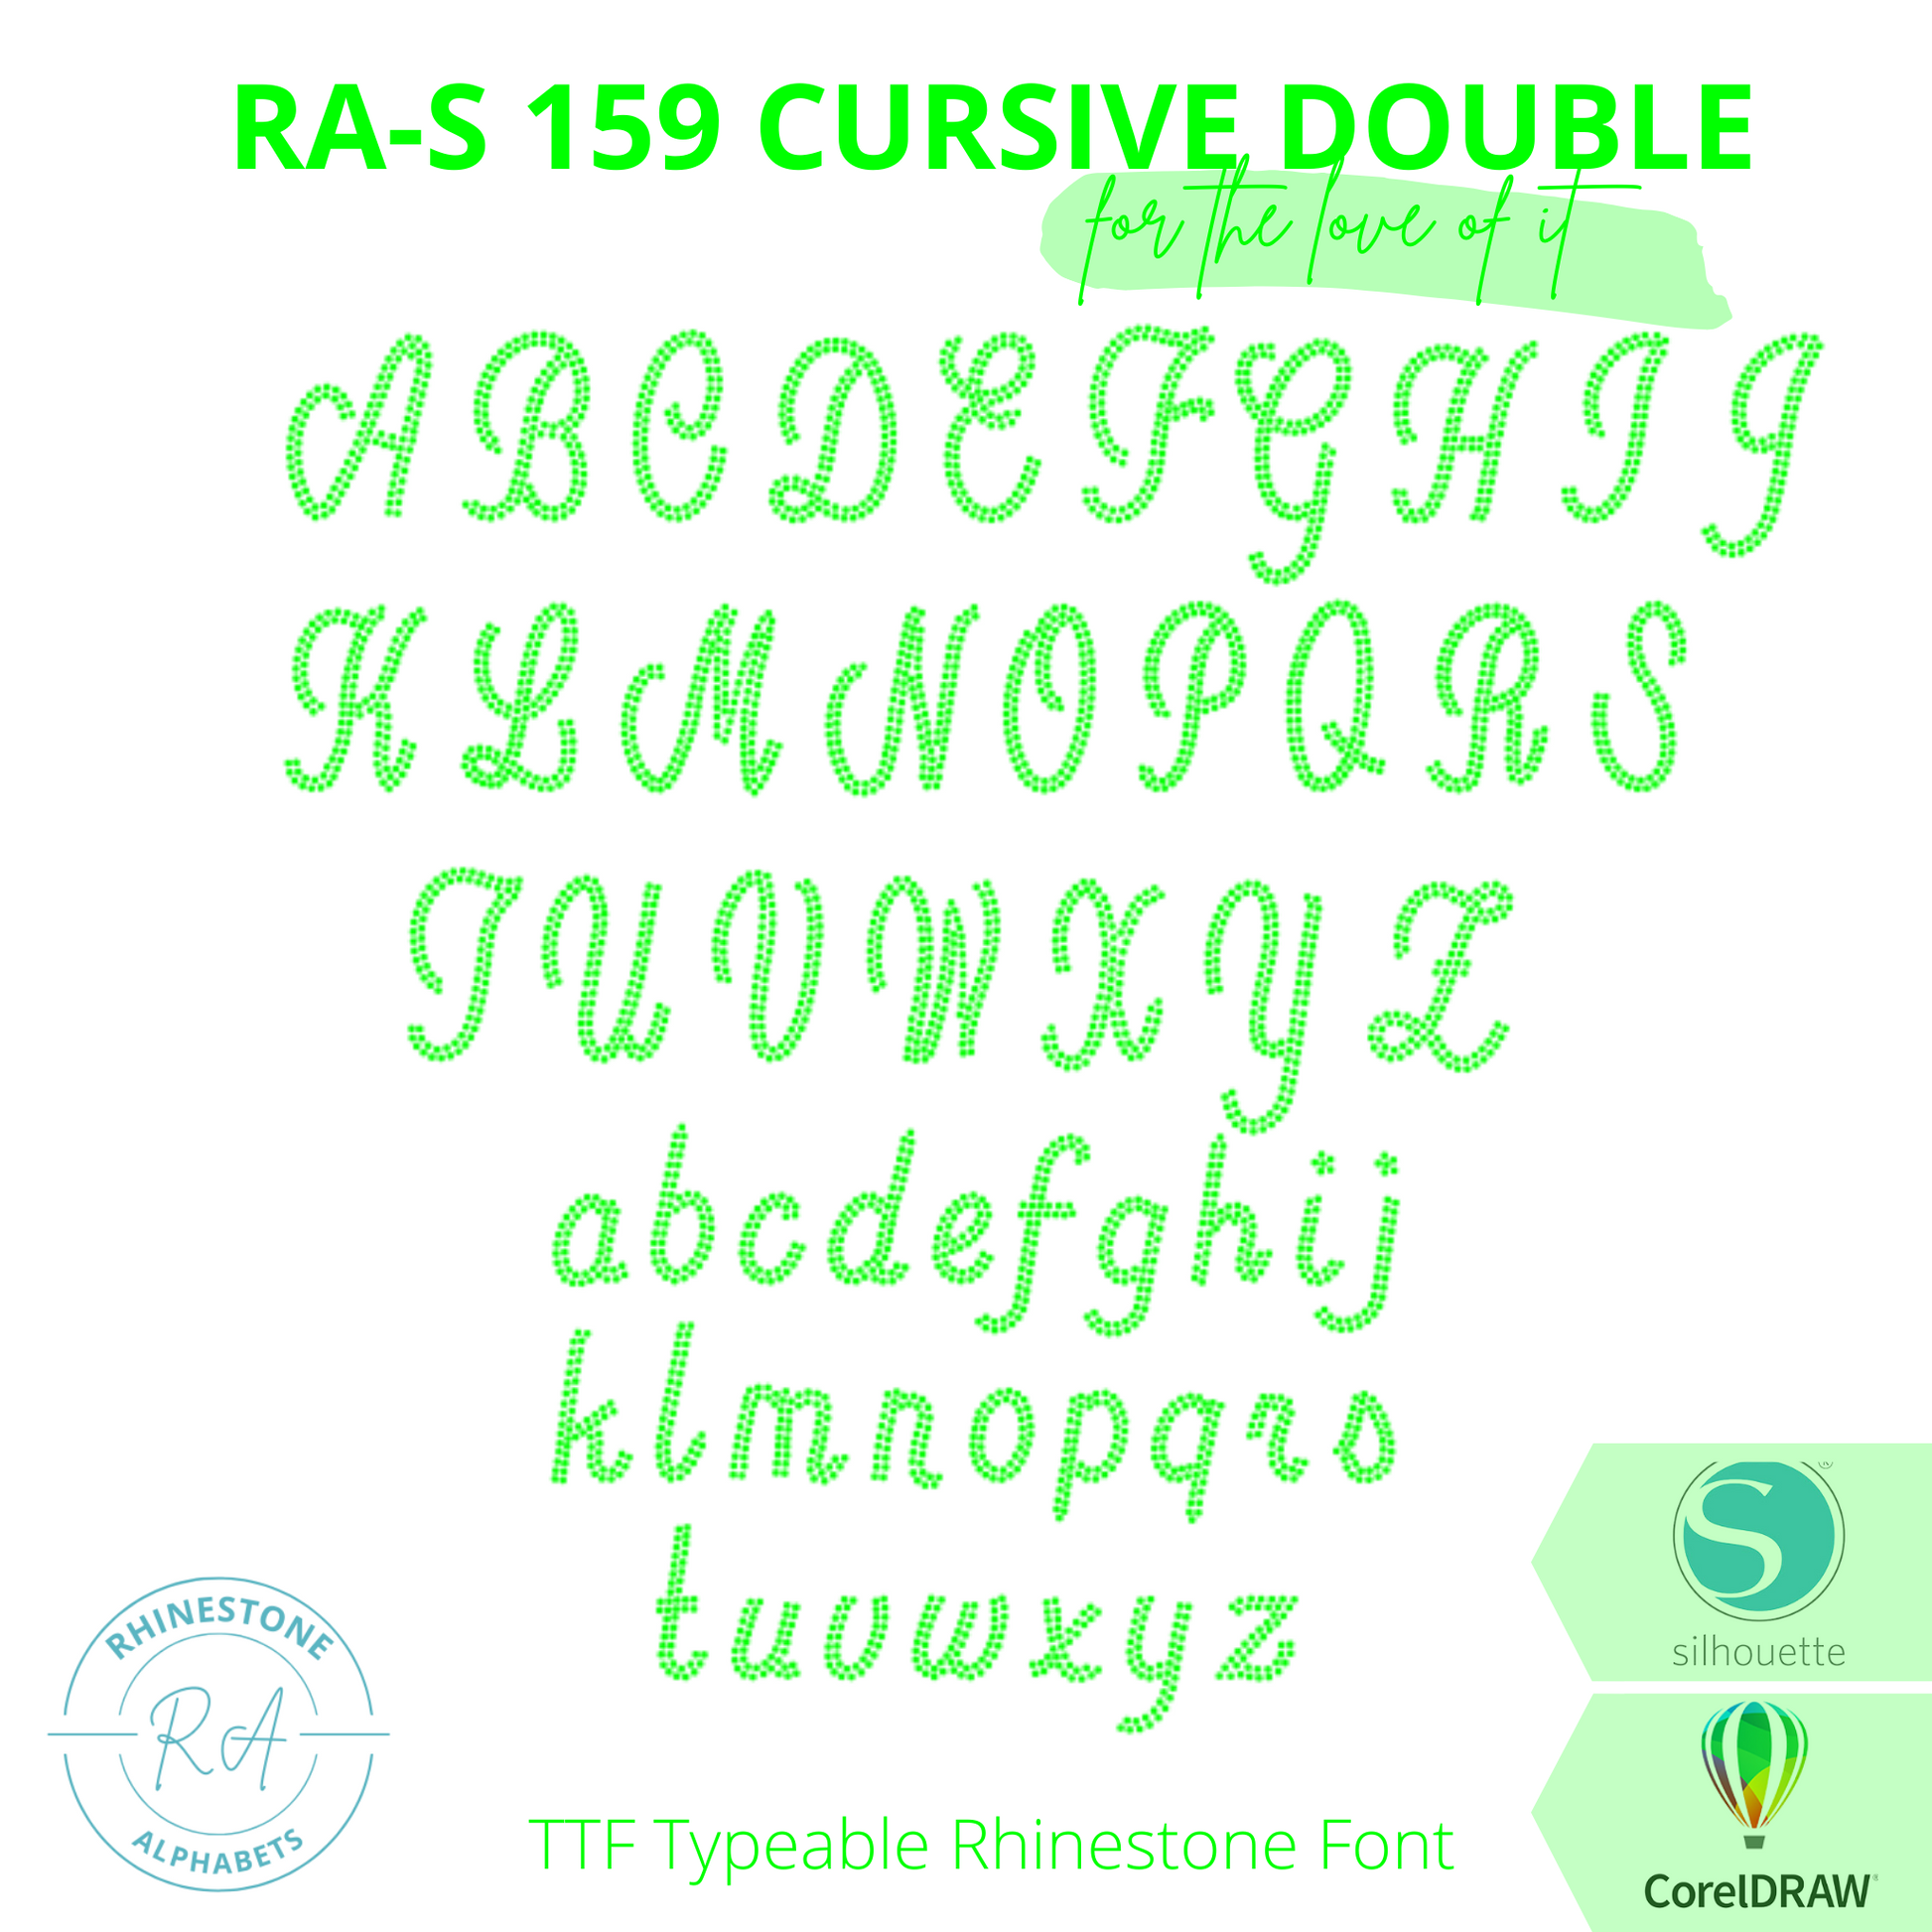 RA-S 159 Cursive Double - RhinestoneAlphabets